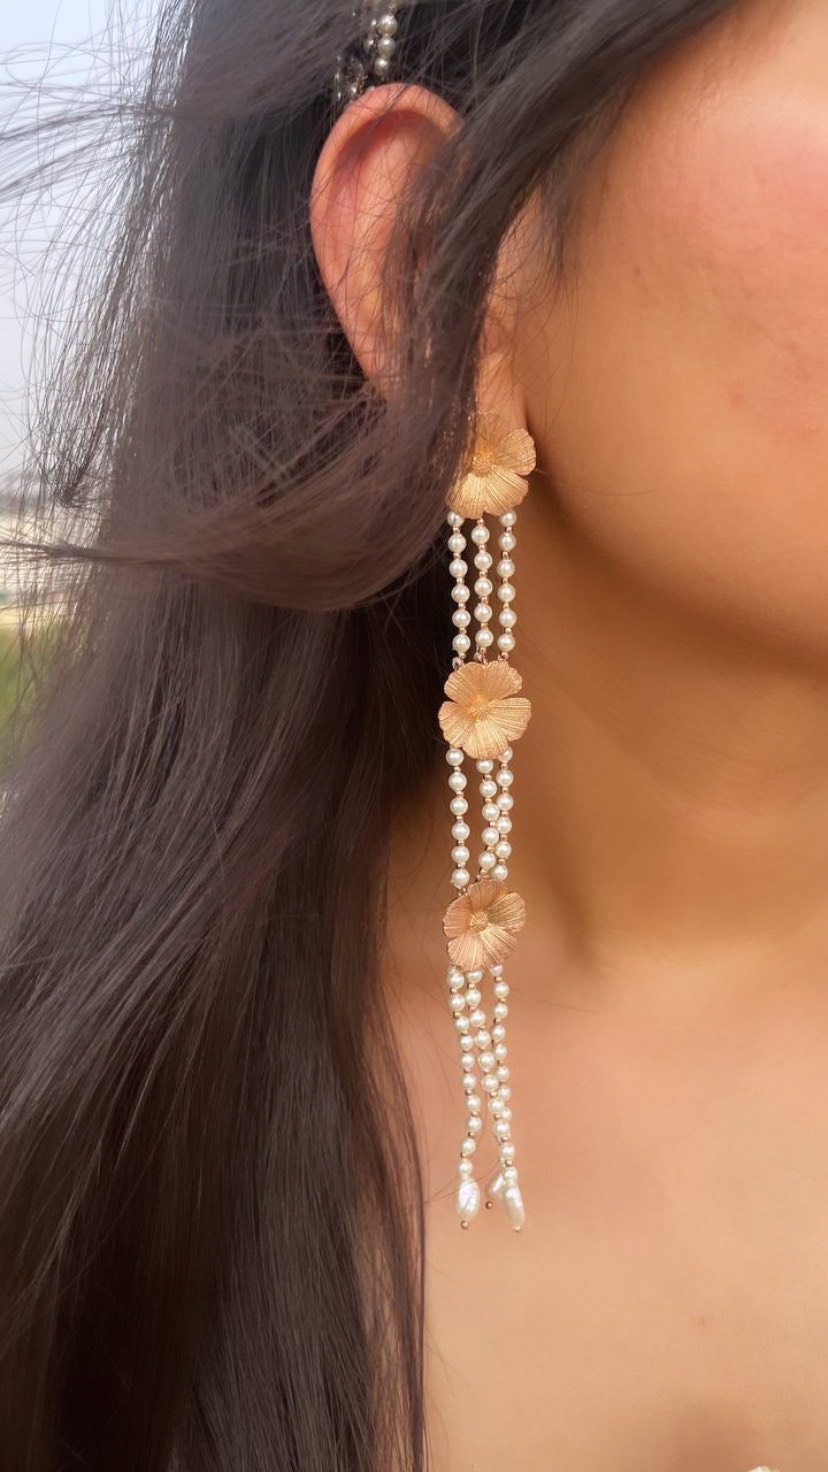 Royal Floral dream earrings in white